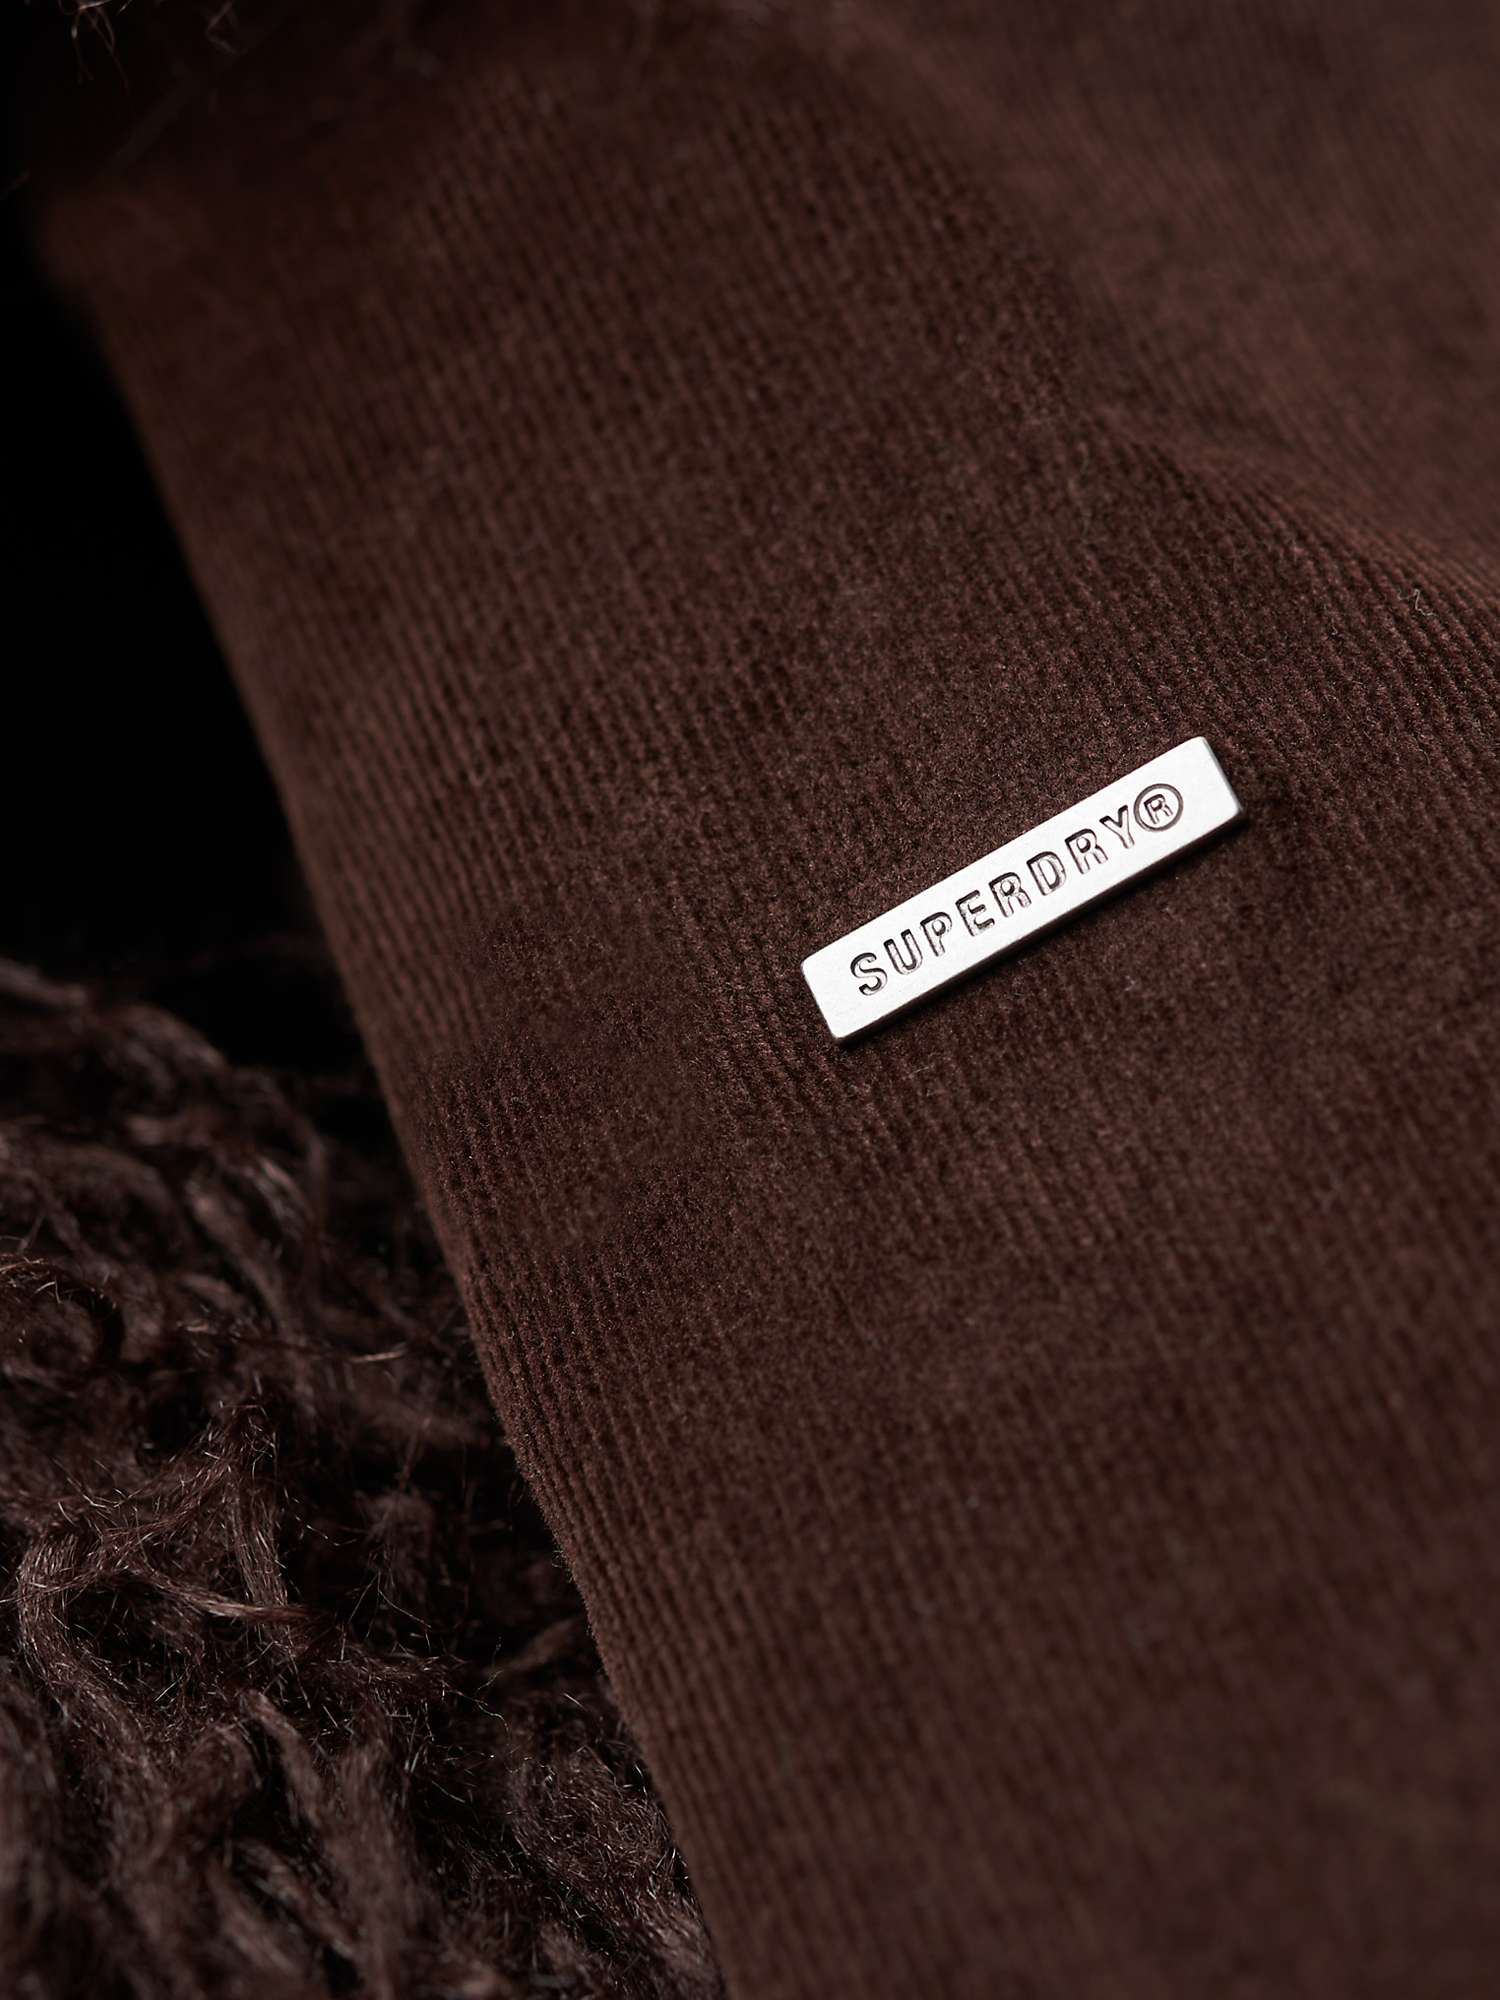 Buy Superdry Faux Fur Lined Afghan Coat Online at johnlewis.com